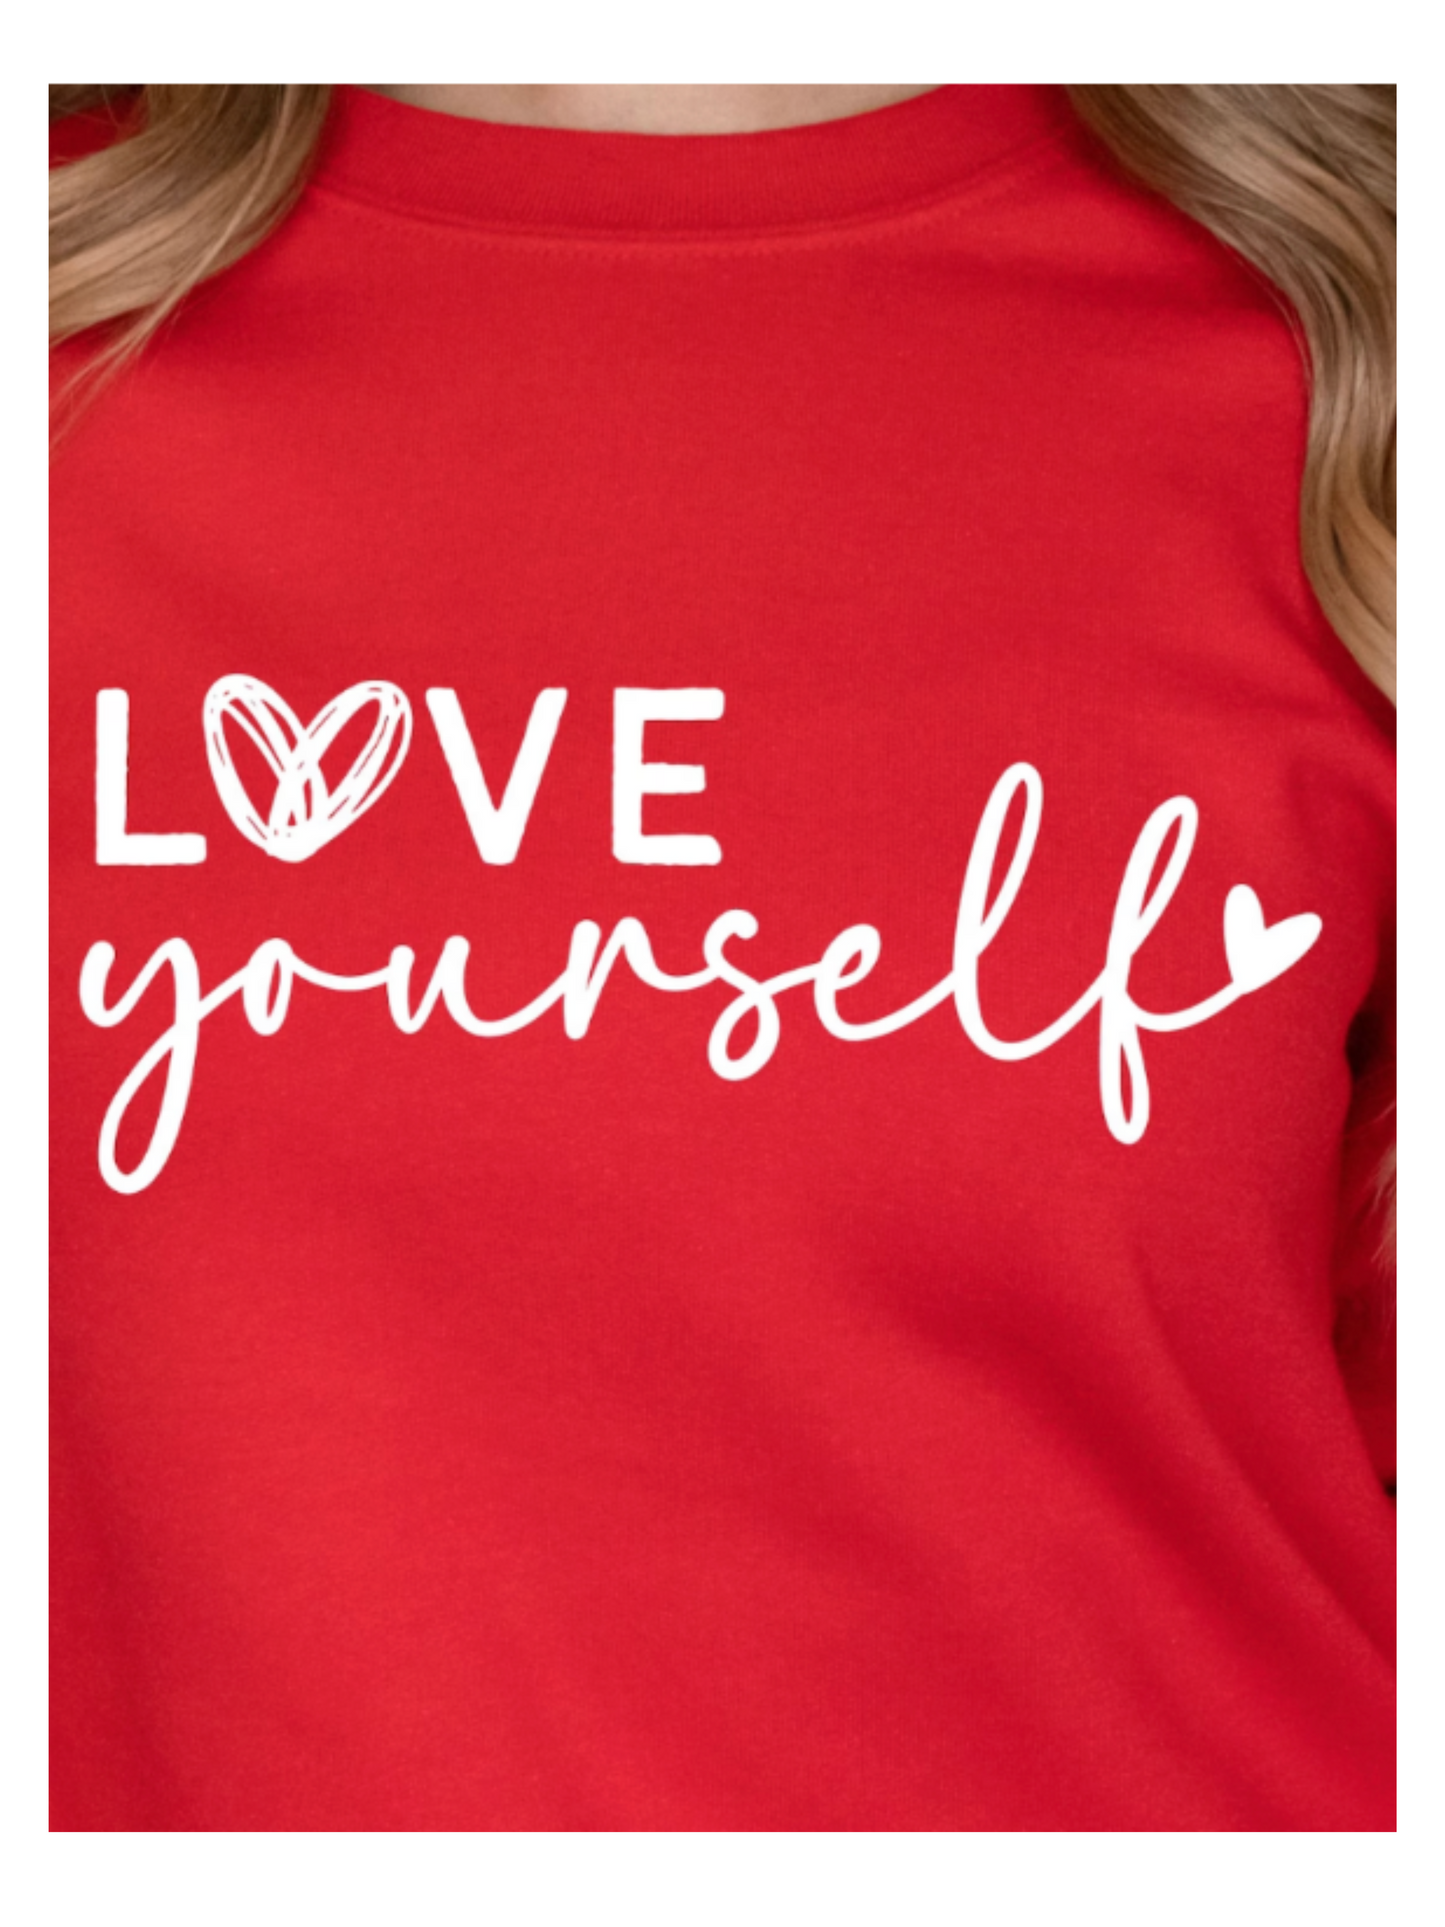 Love yourself ❤️